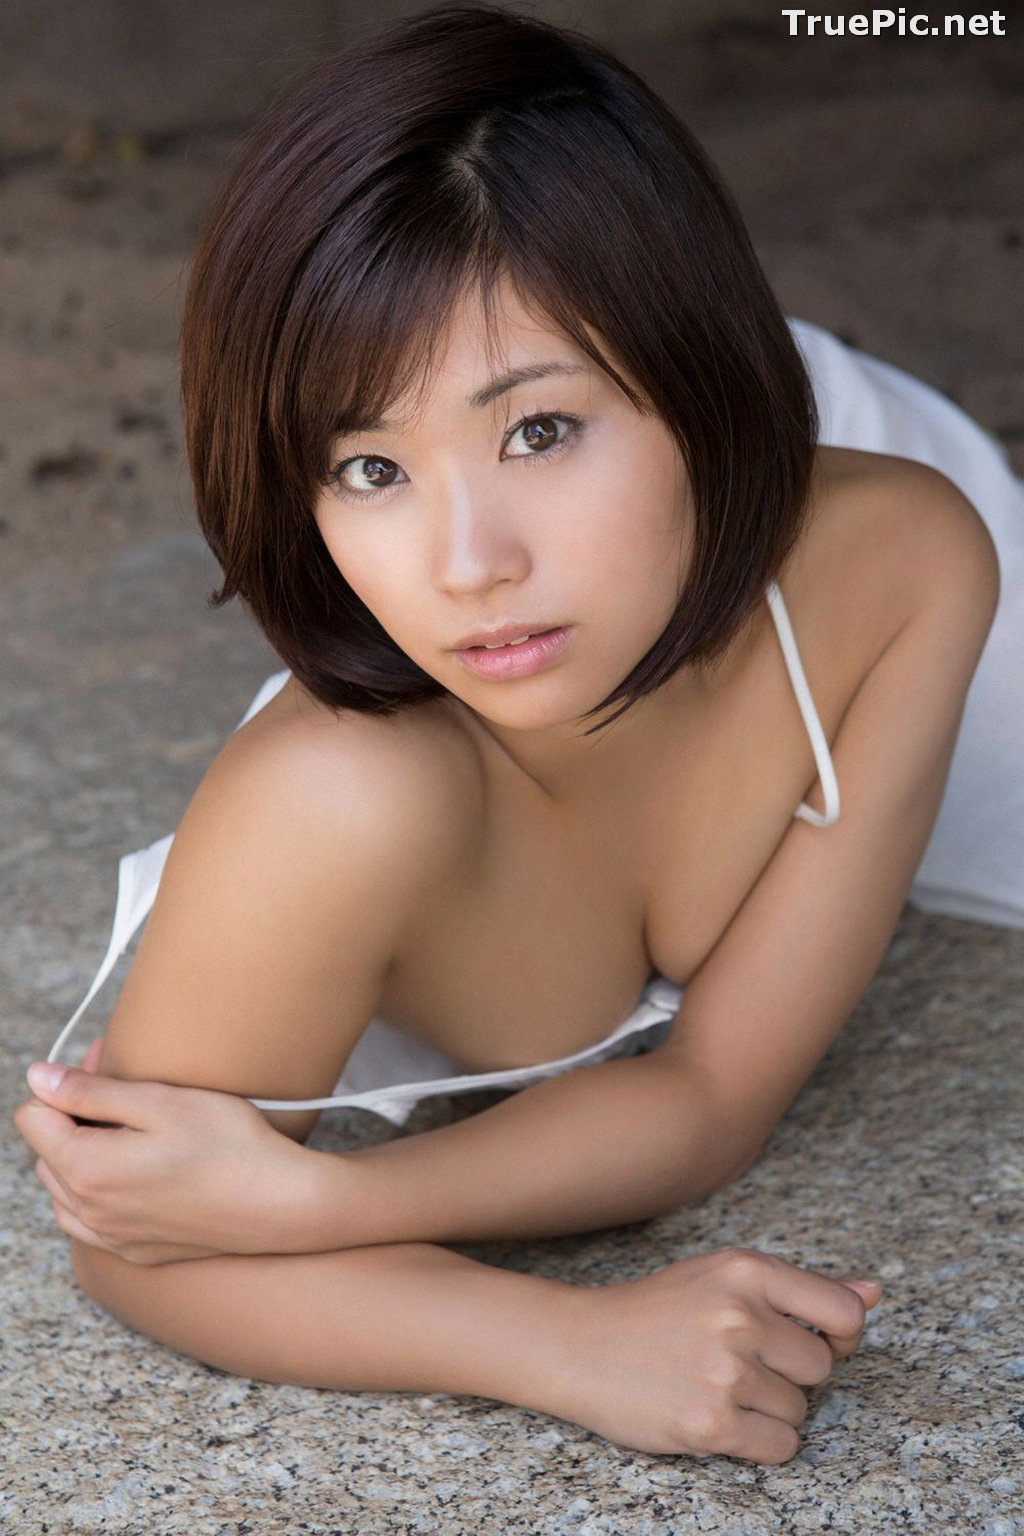 Image [YS Web] Vol.641 - Japanese Model Hitomi Yasueda Photo Album - TruePic.net - Picture-65